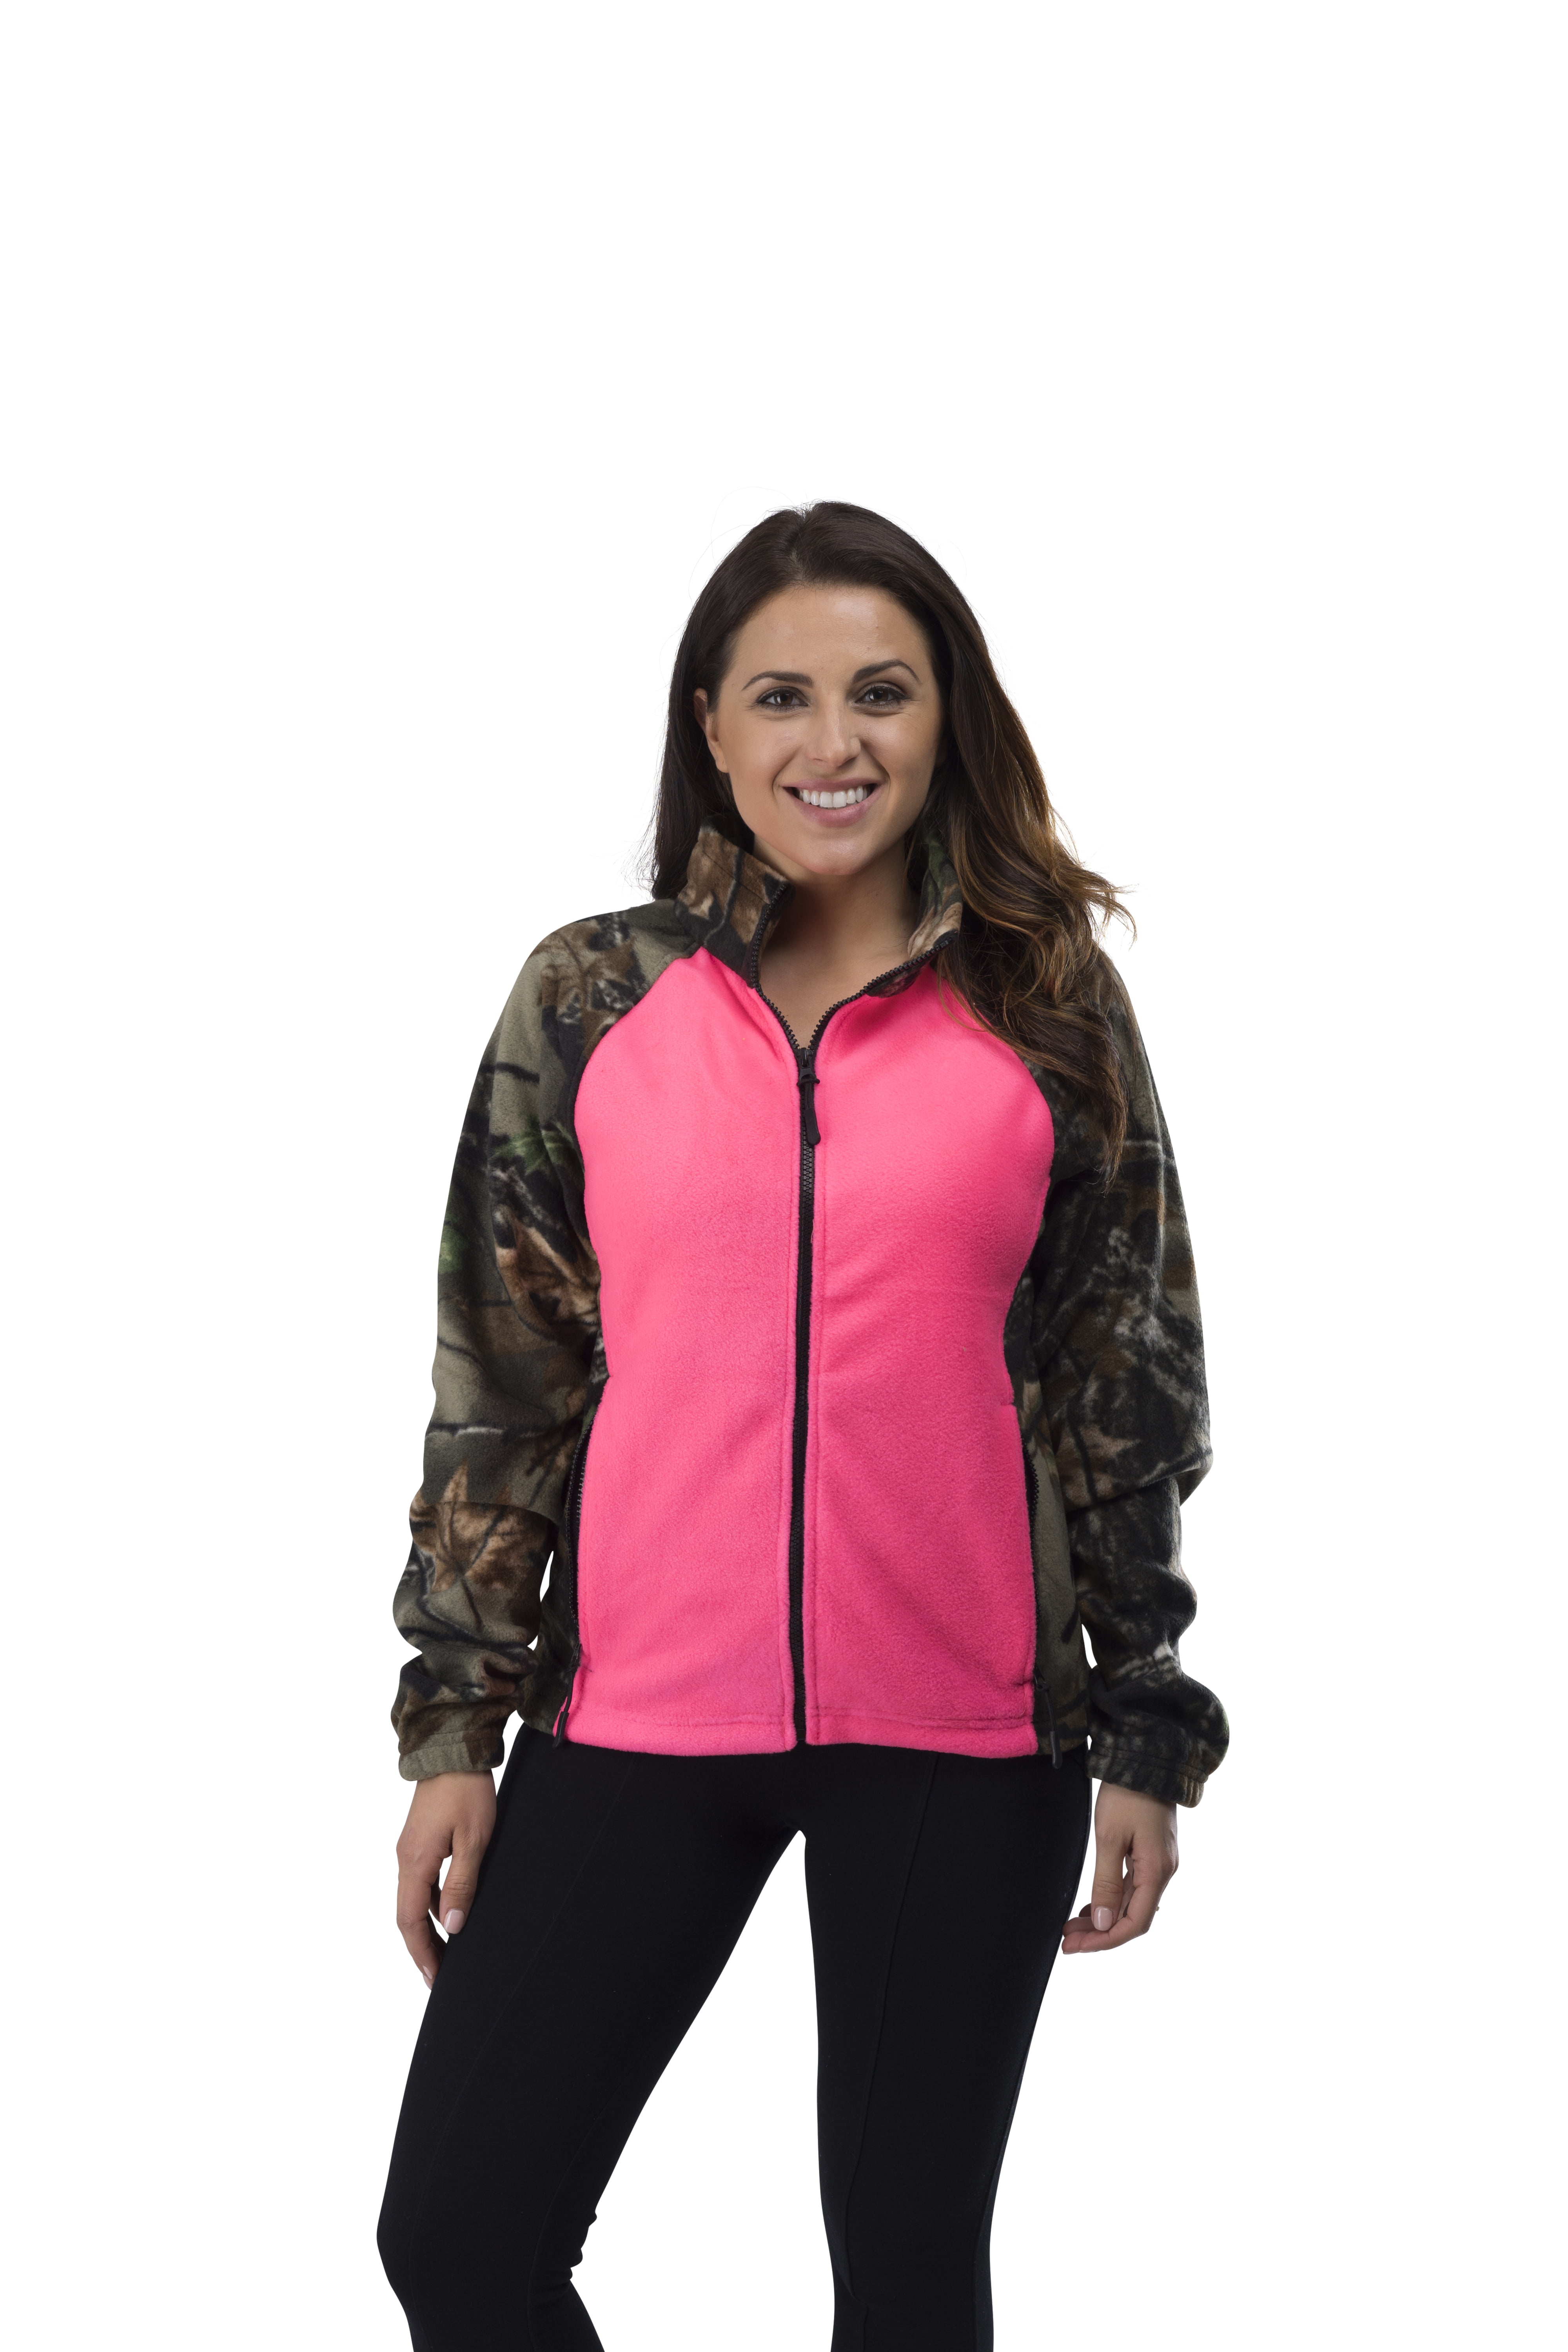 TrailCrest Women's Semi-Fitted Full Zip Fleece Long Sleeve Camo Jacket, Hot  Pink, Small 